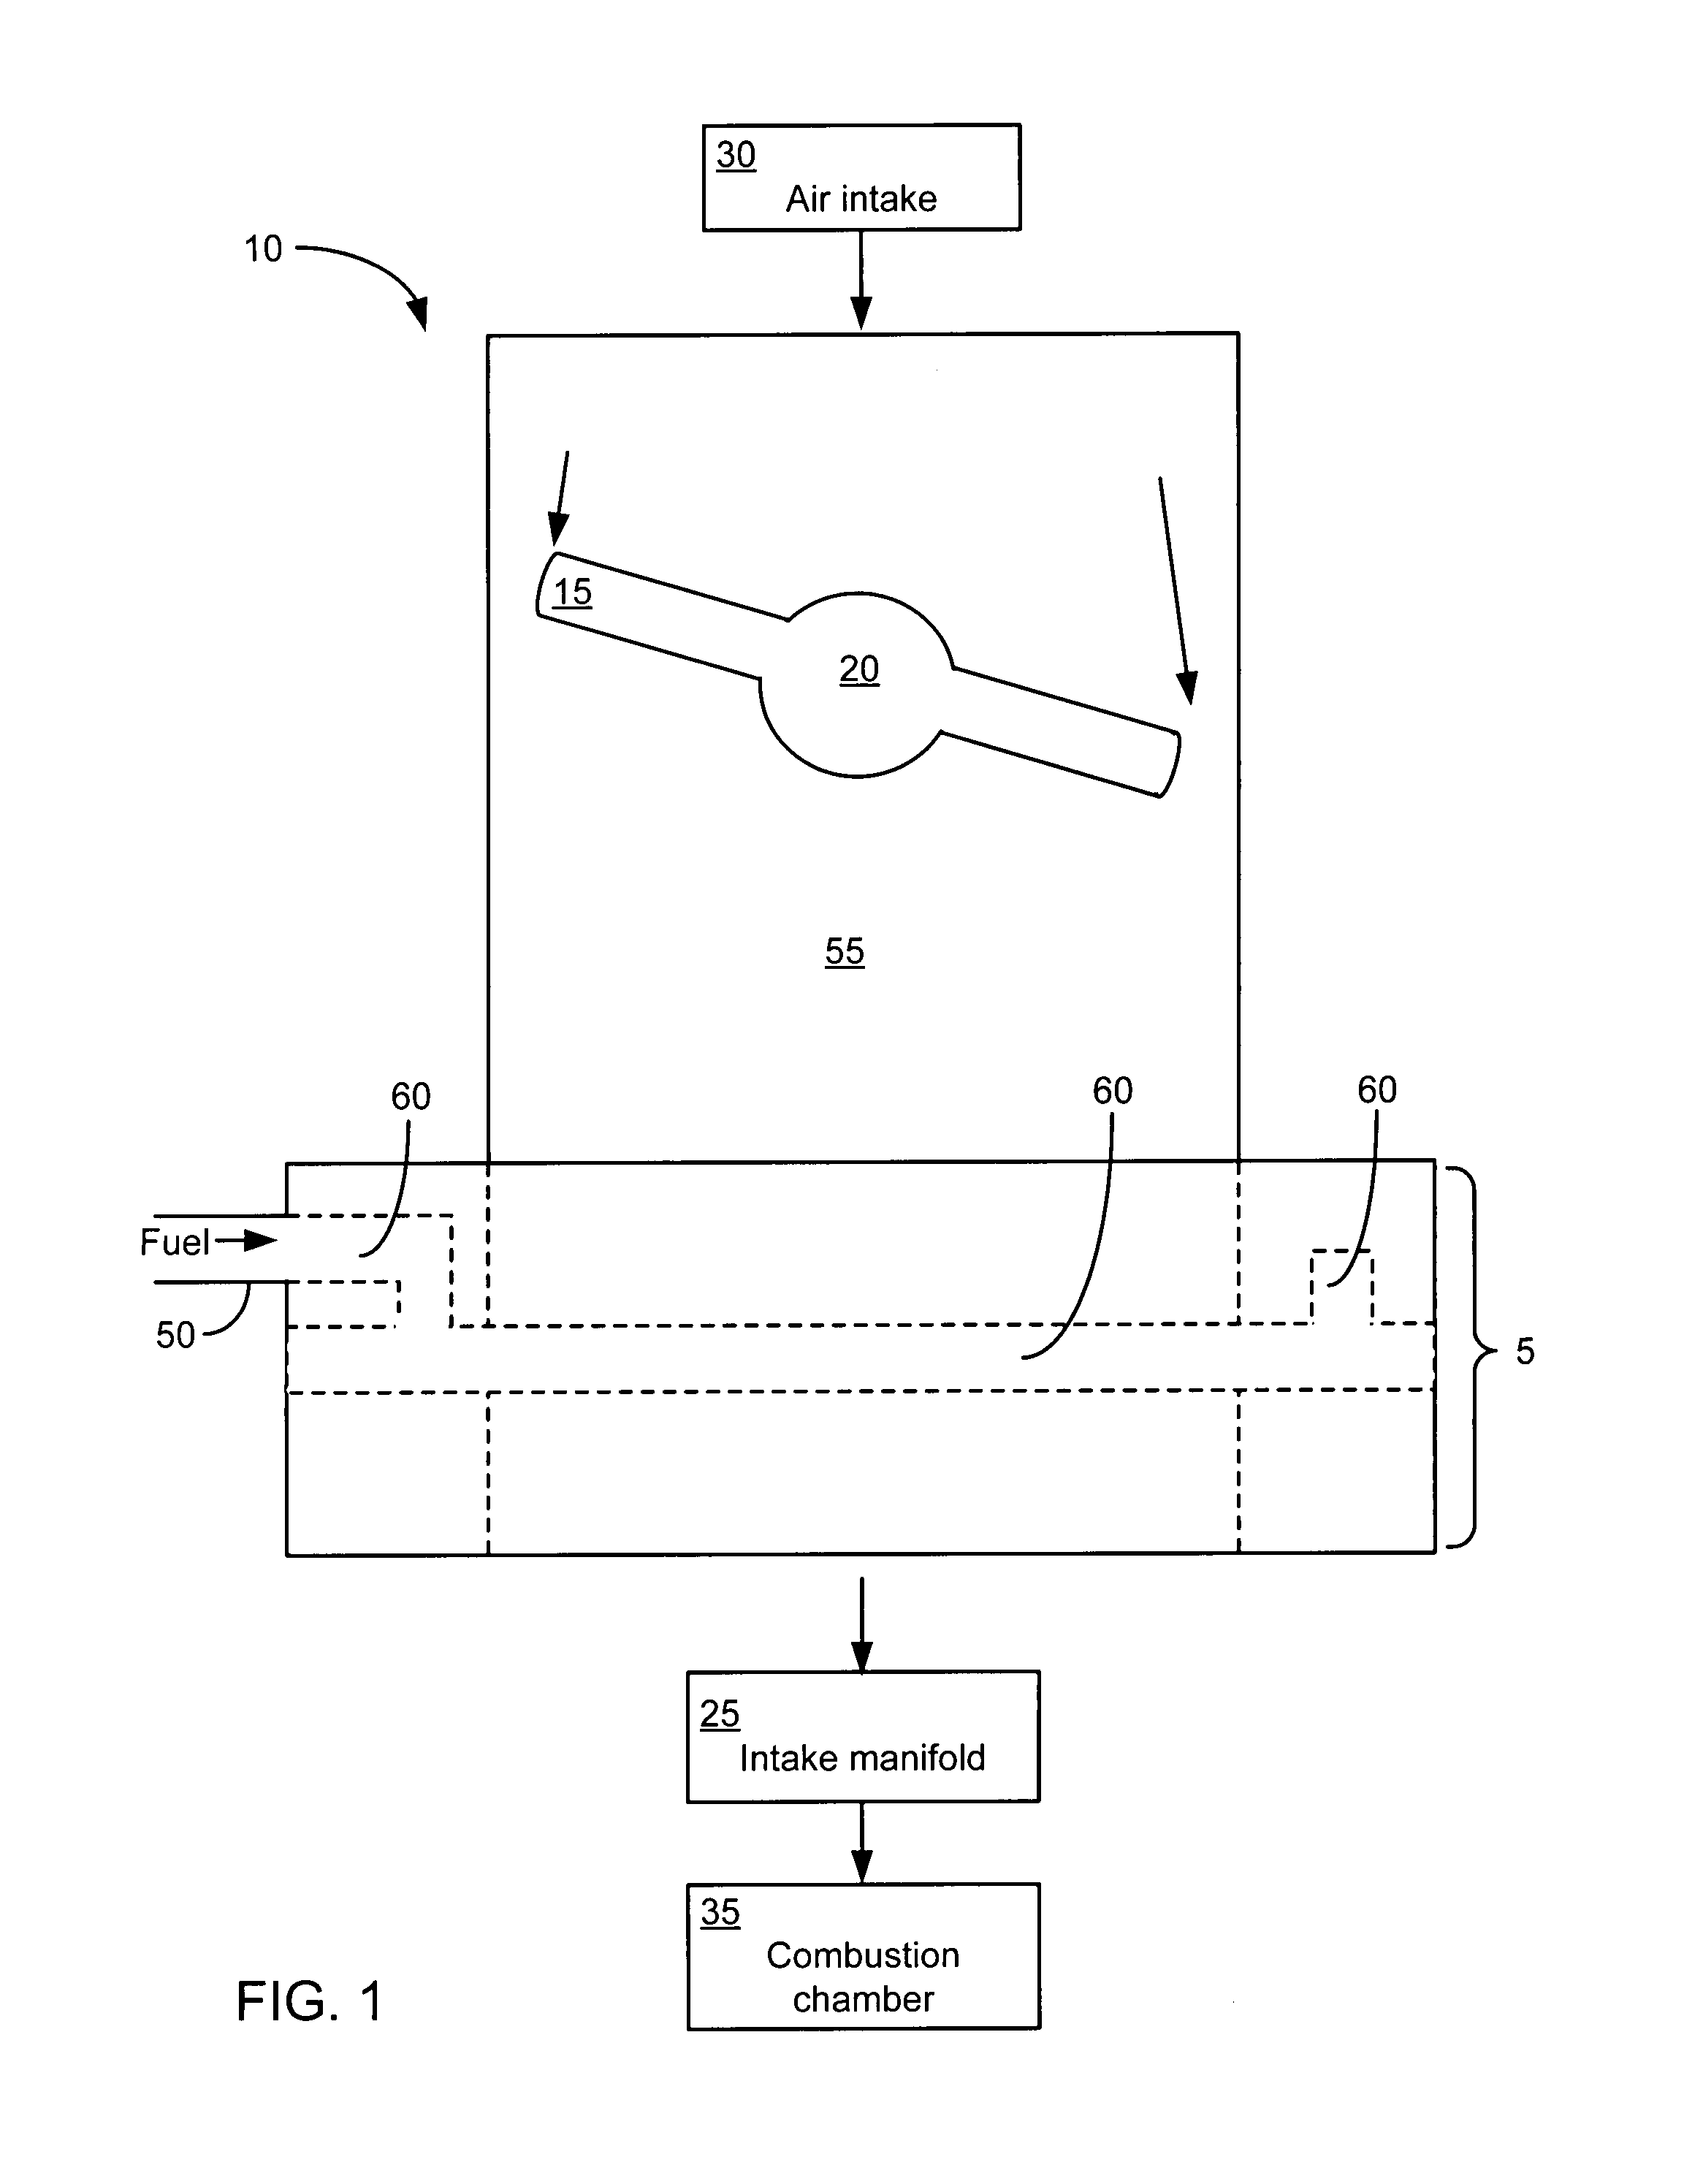 Fuel mixer apparatus and method